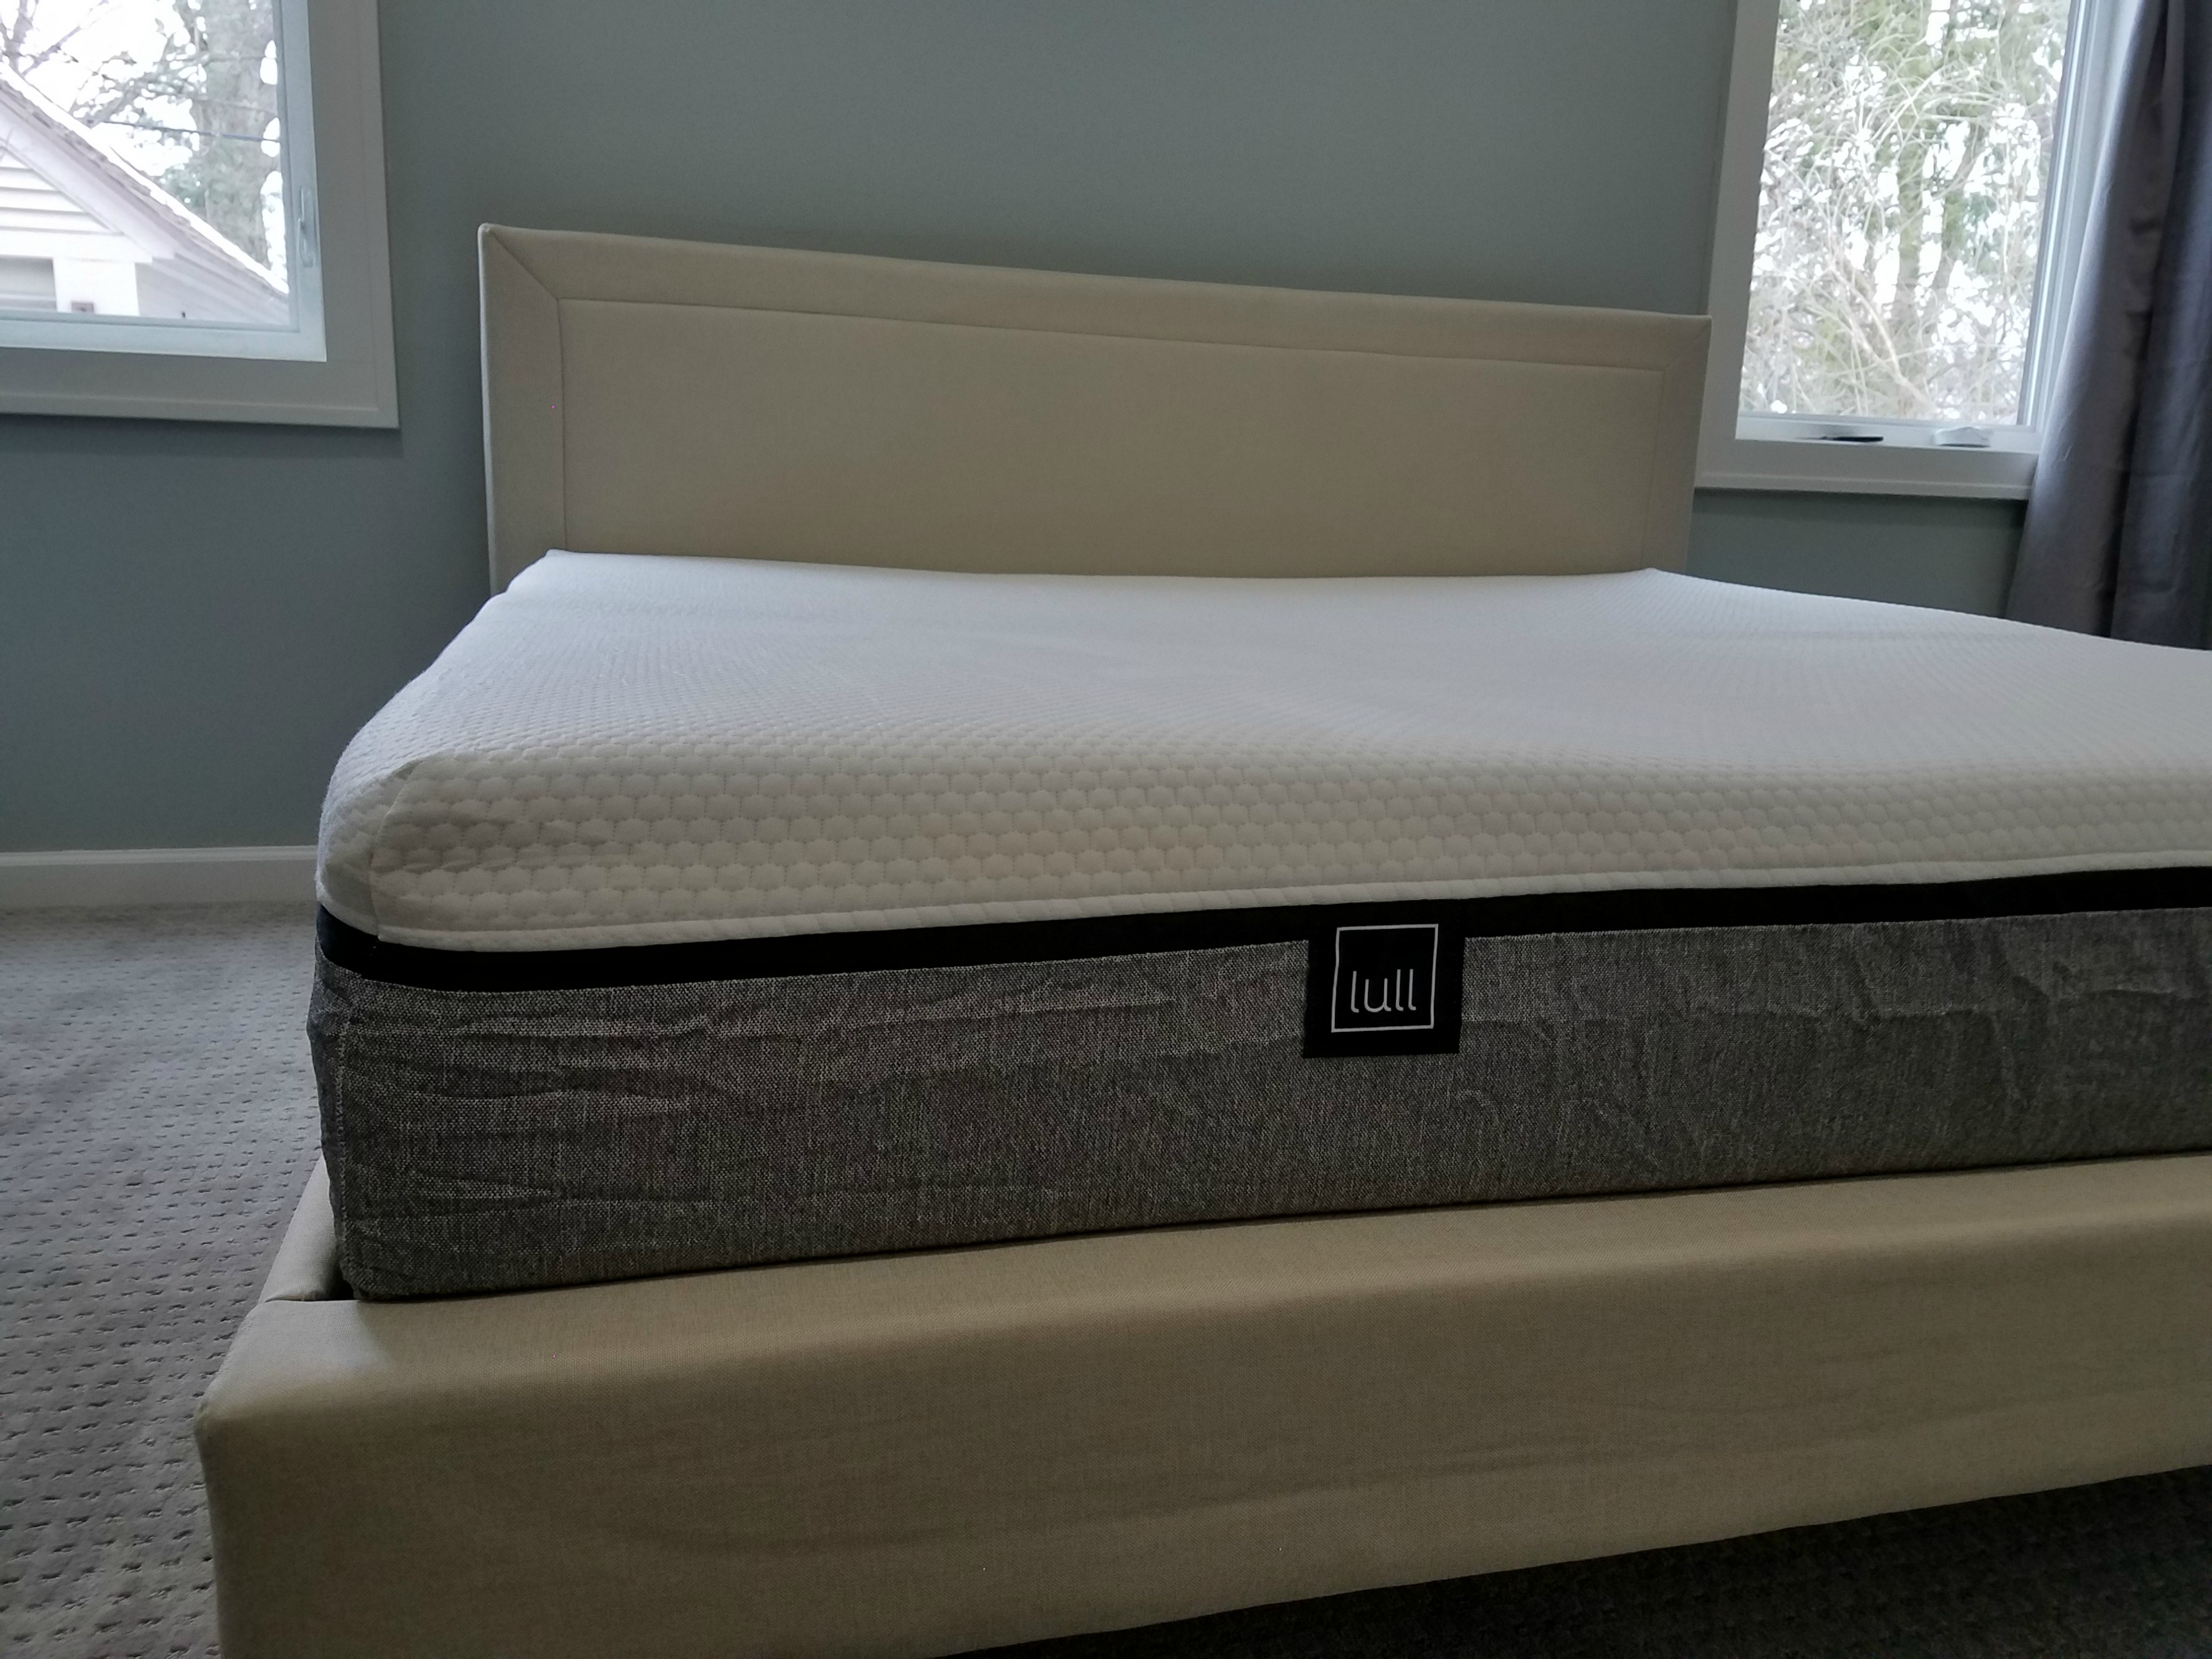 lull mattress reviews sleep like the dead